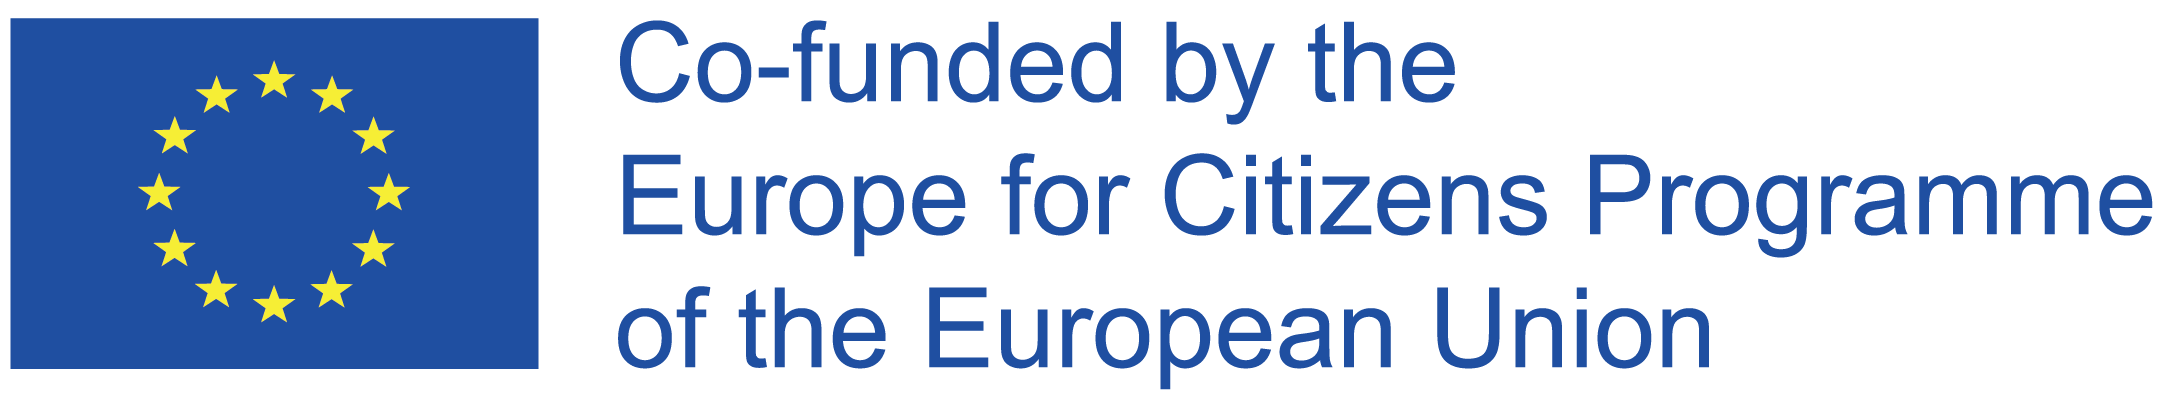 The Europe for Citizens Programme of the European Union logo